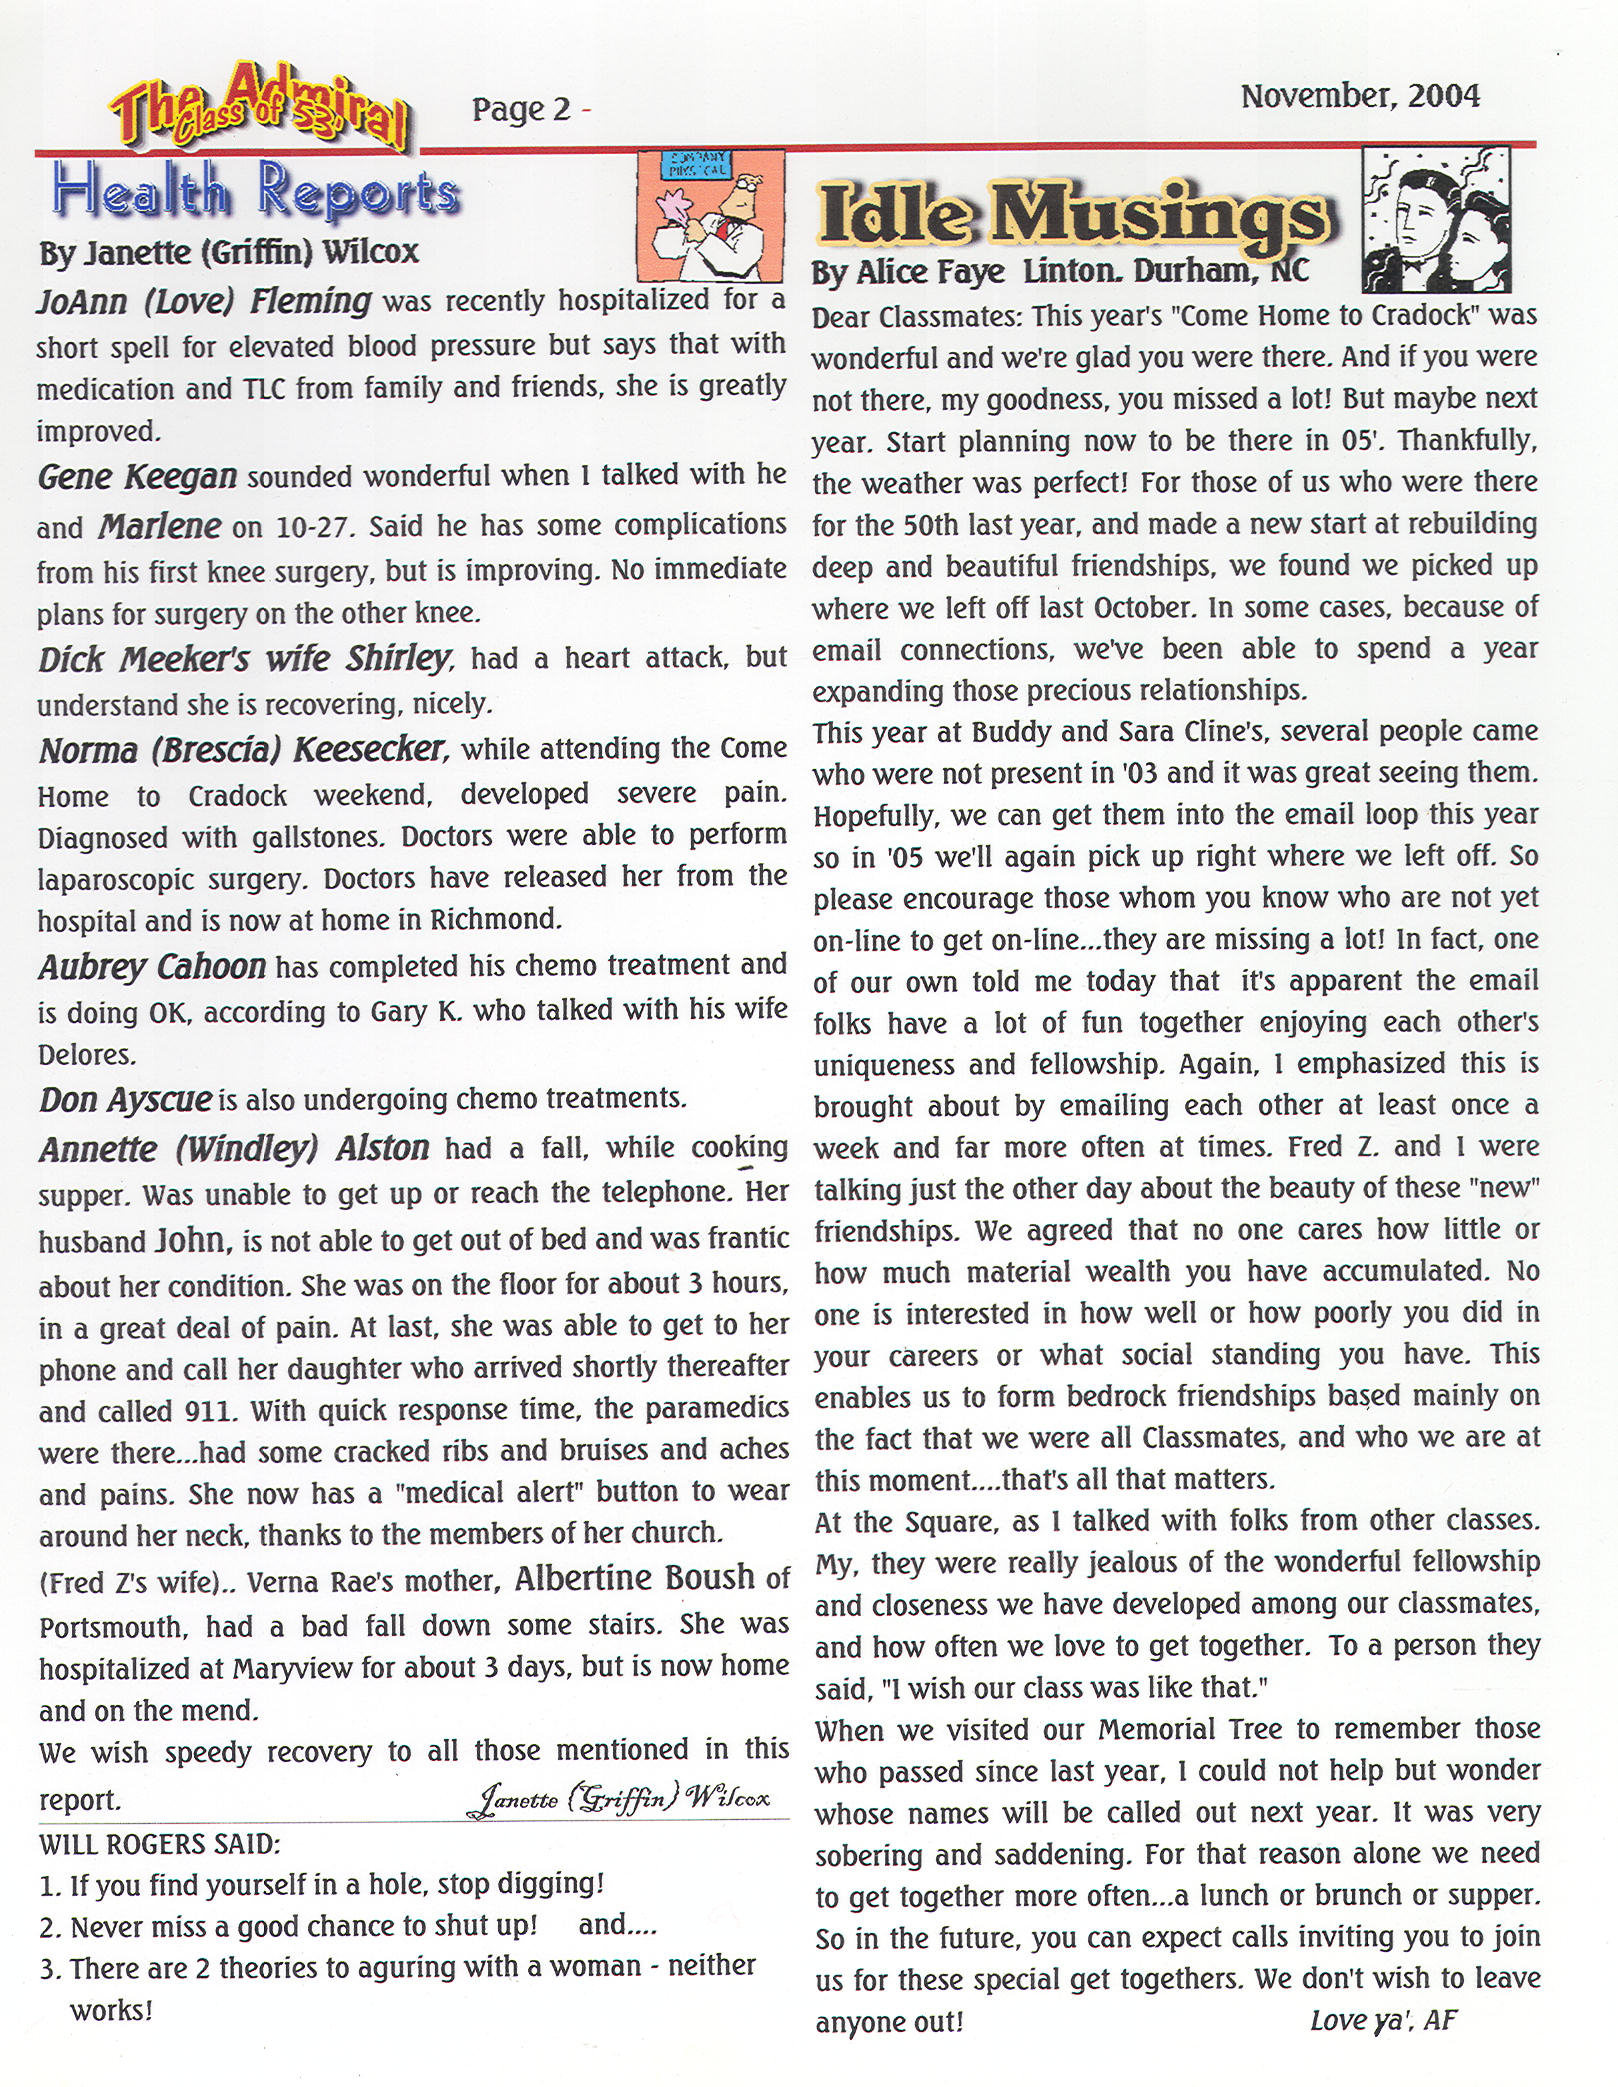 The Admiral - November 2004 - pg. 2